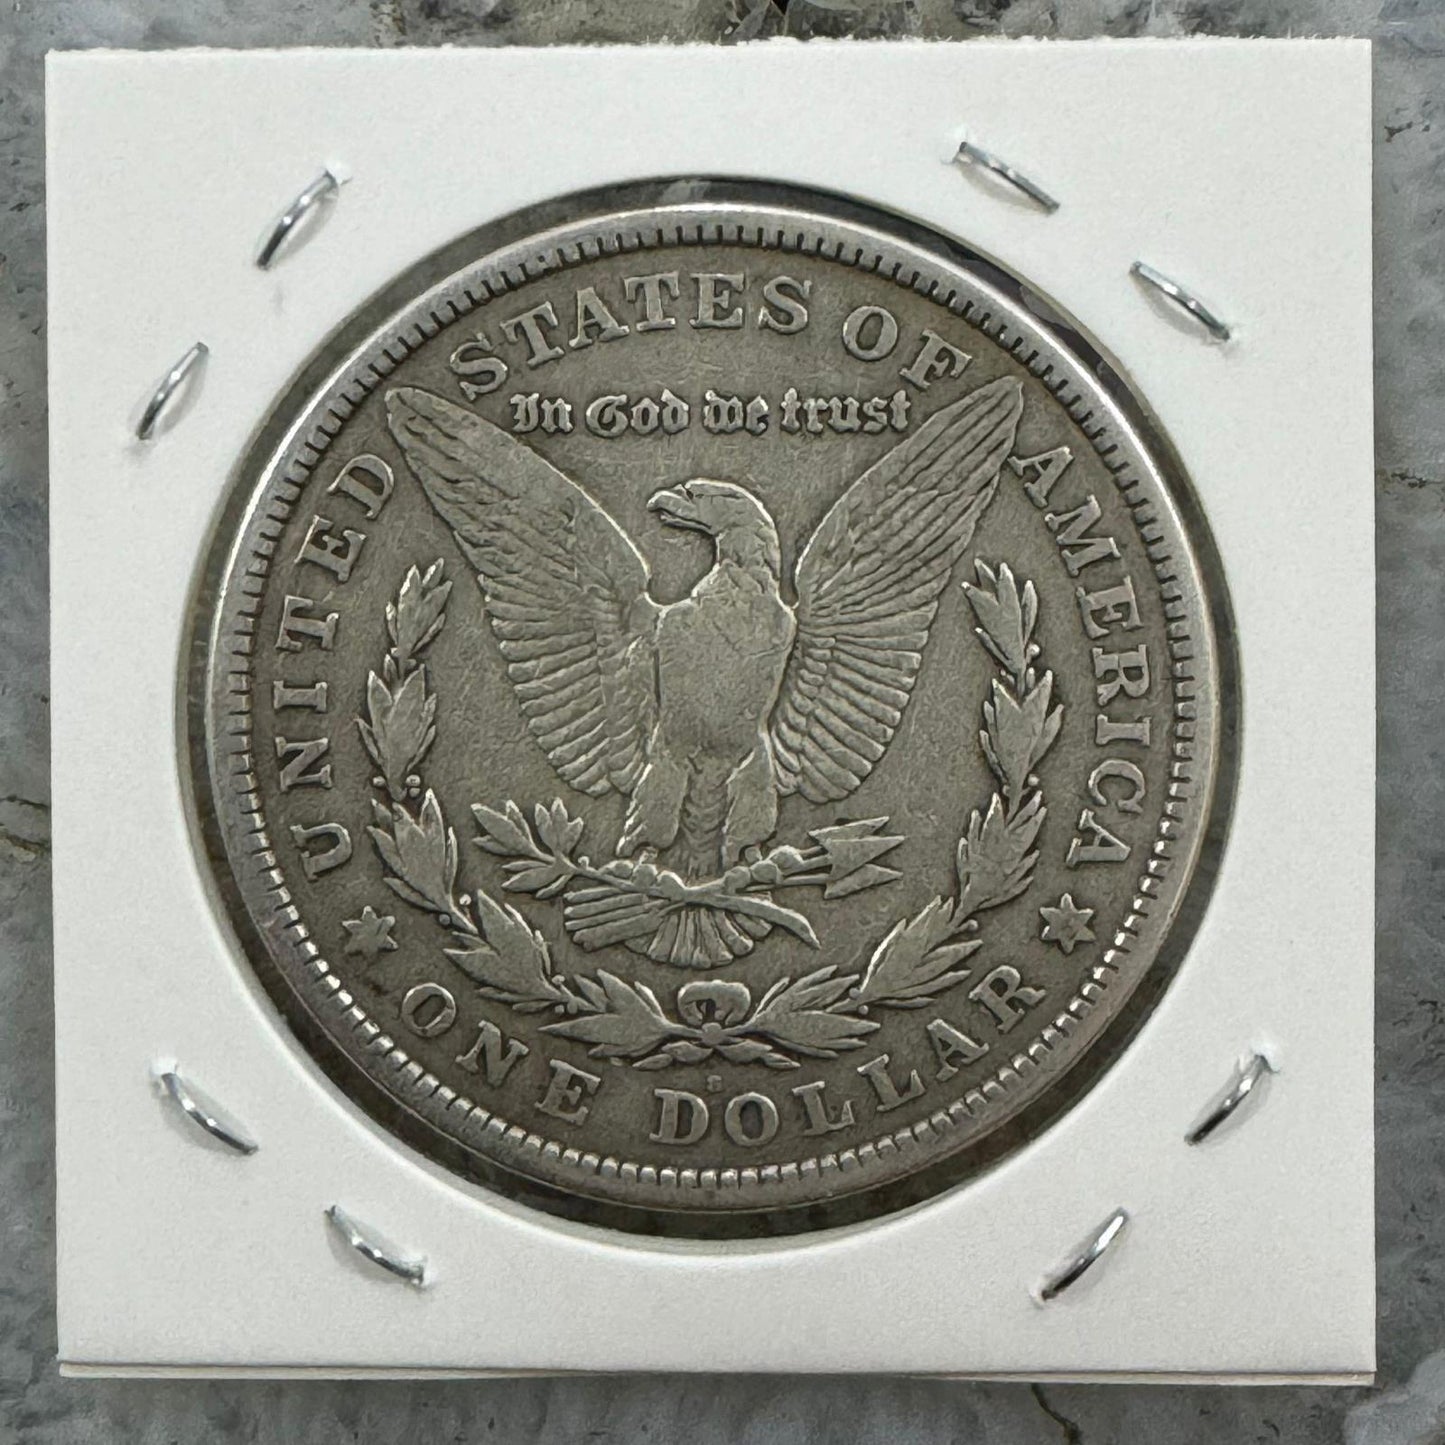 1821-S US Morgan Silver Dollar VG-F #22324-3